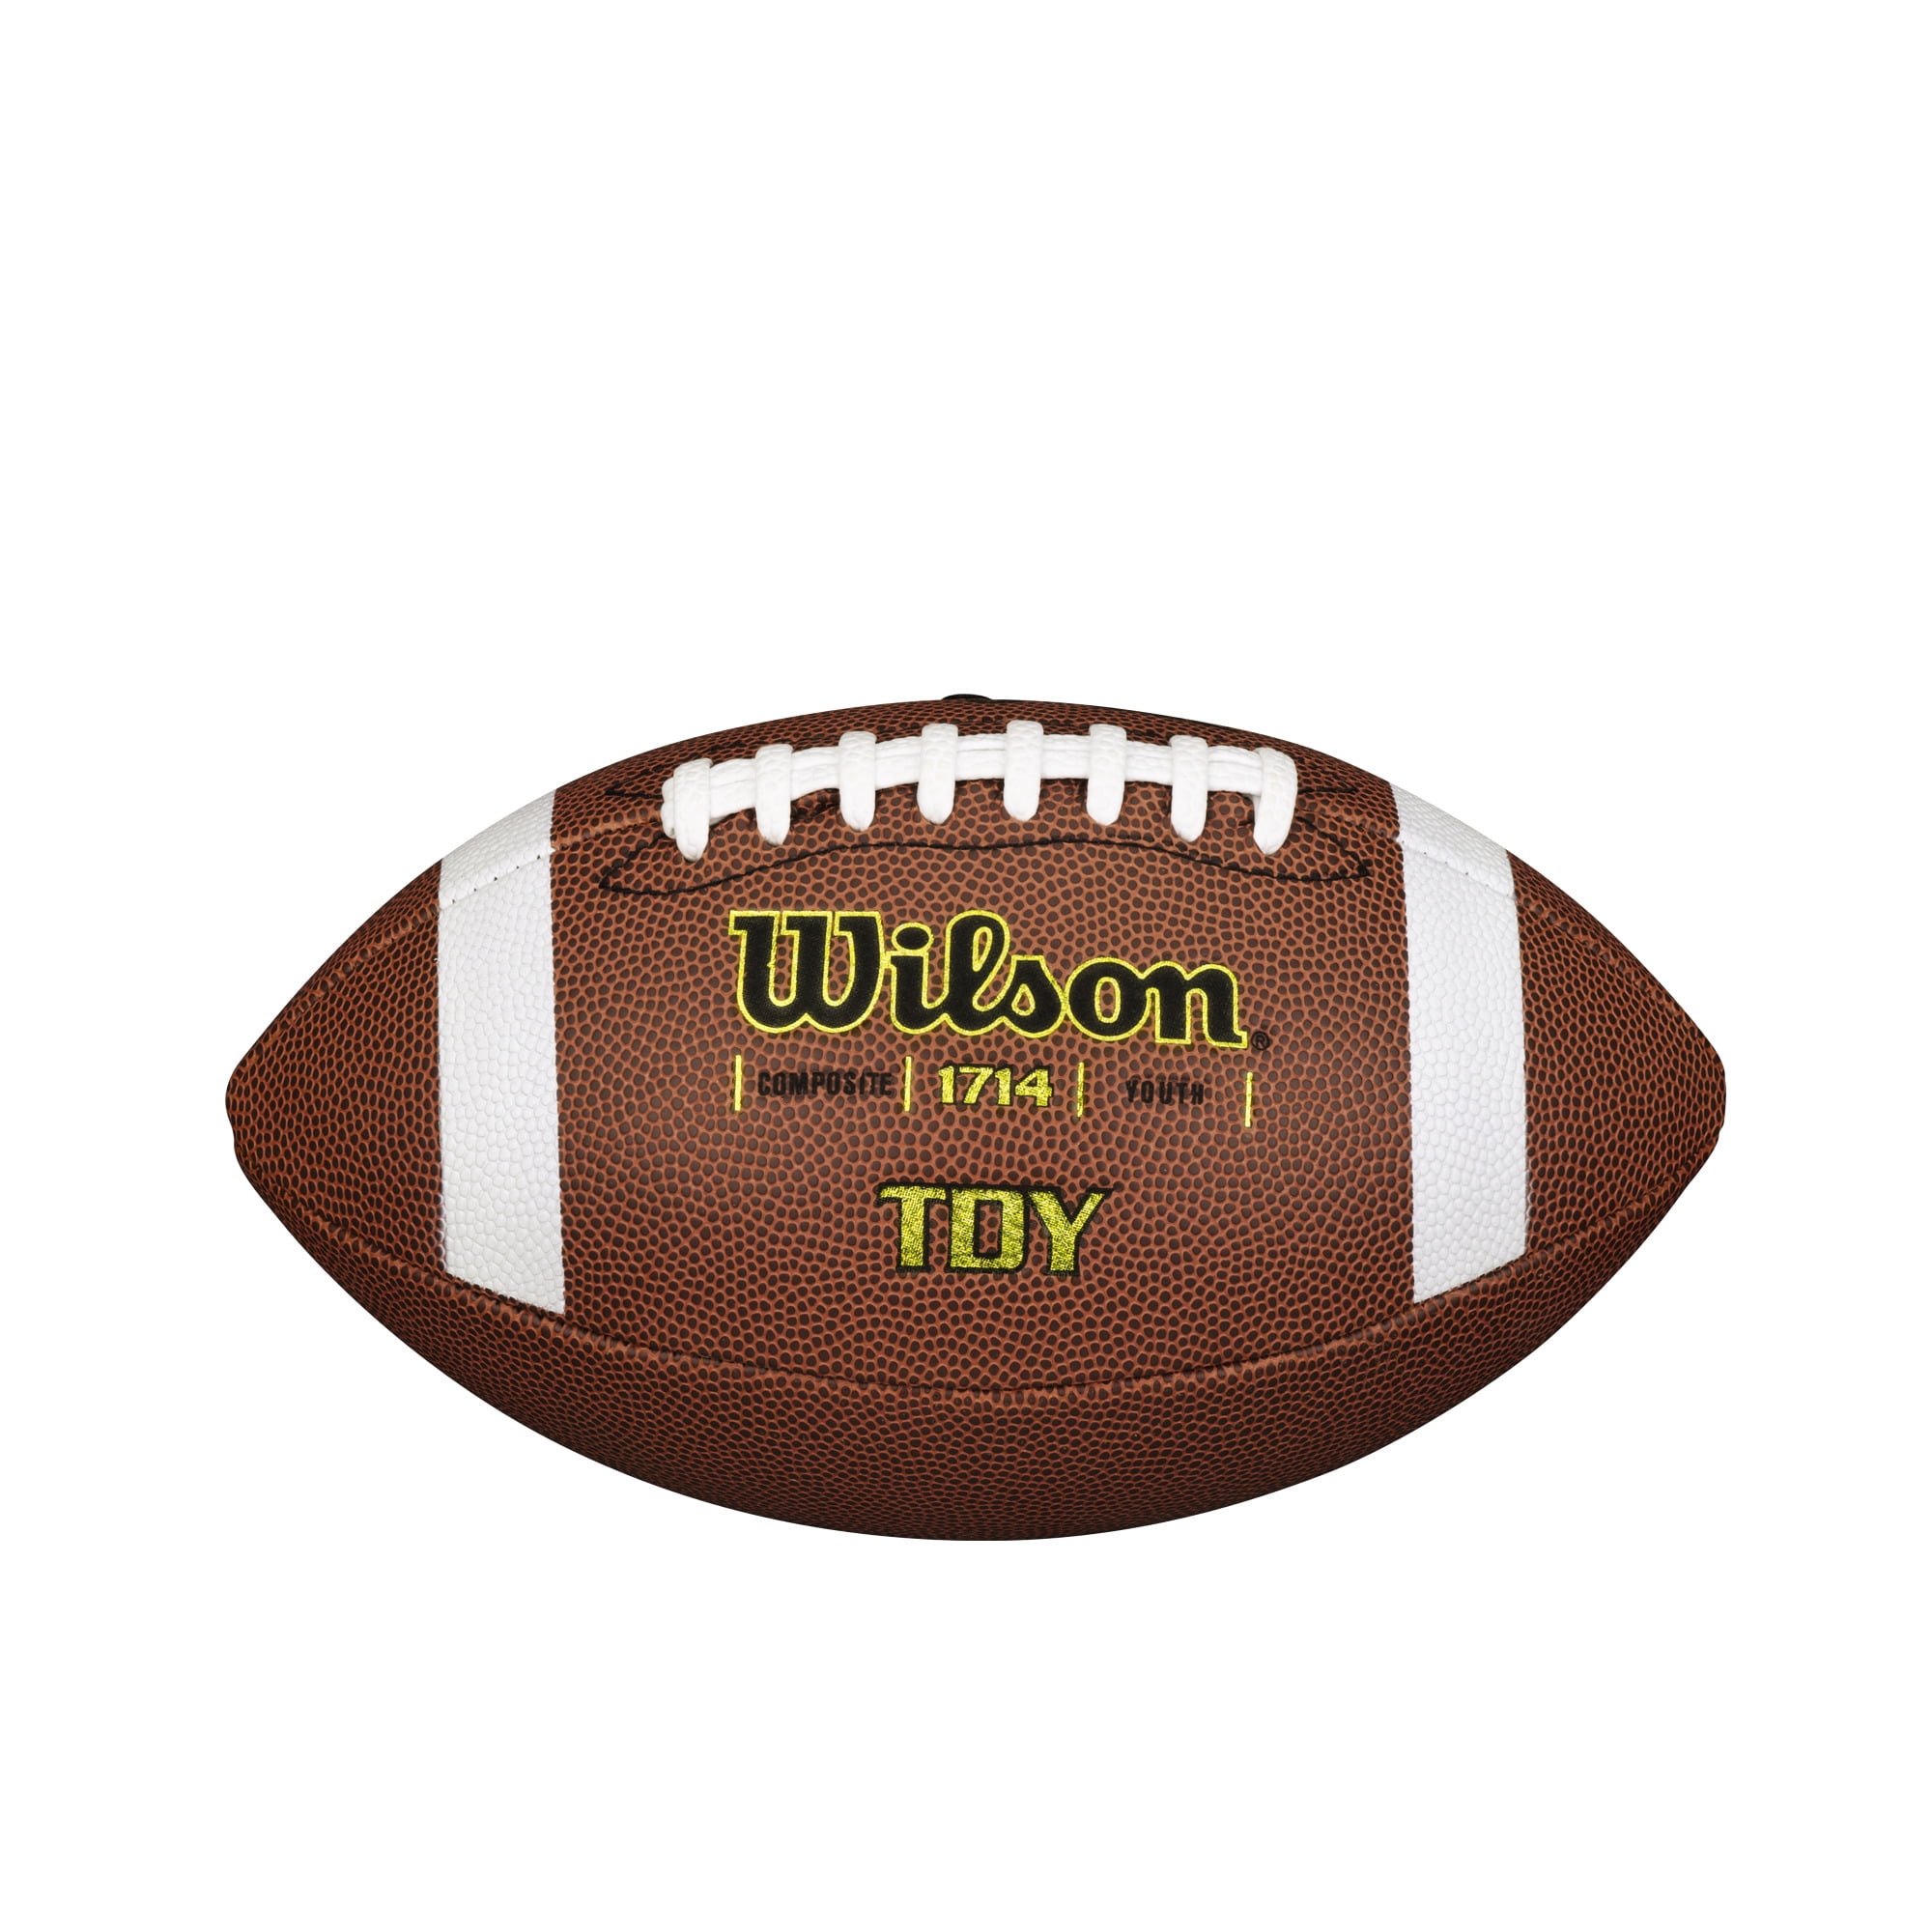 Wilson 1239461 Composite Game Ball Football 